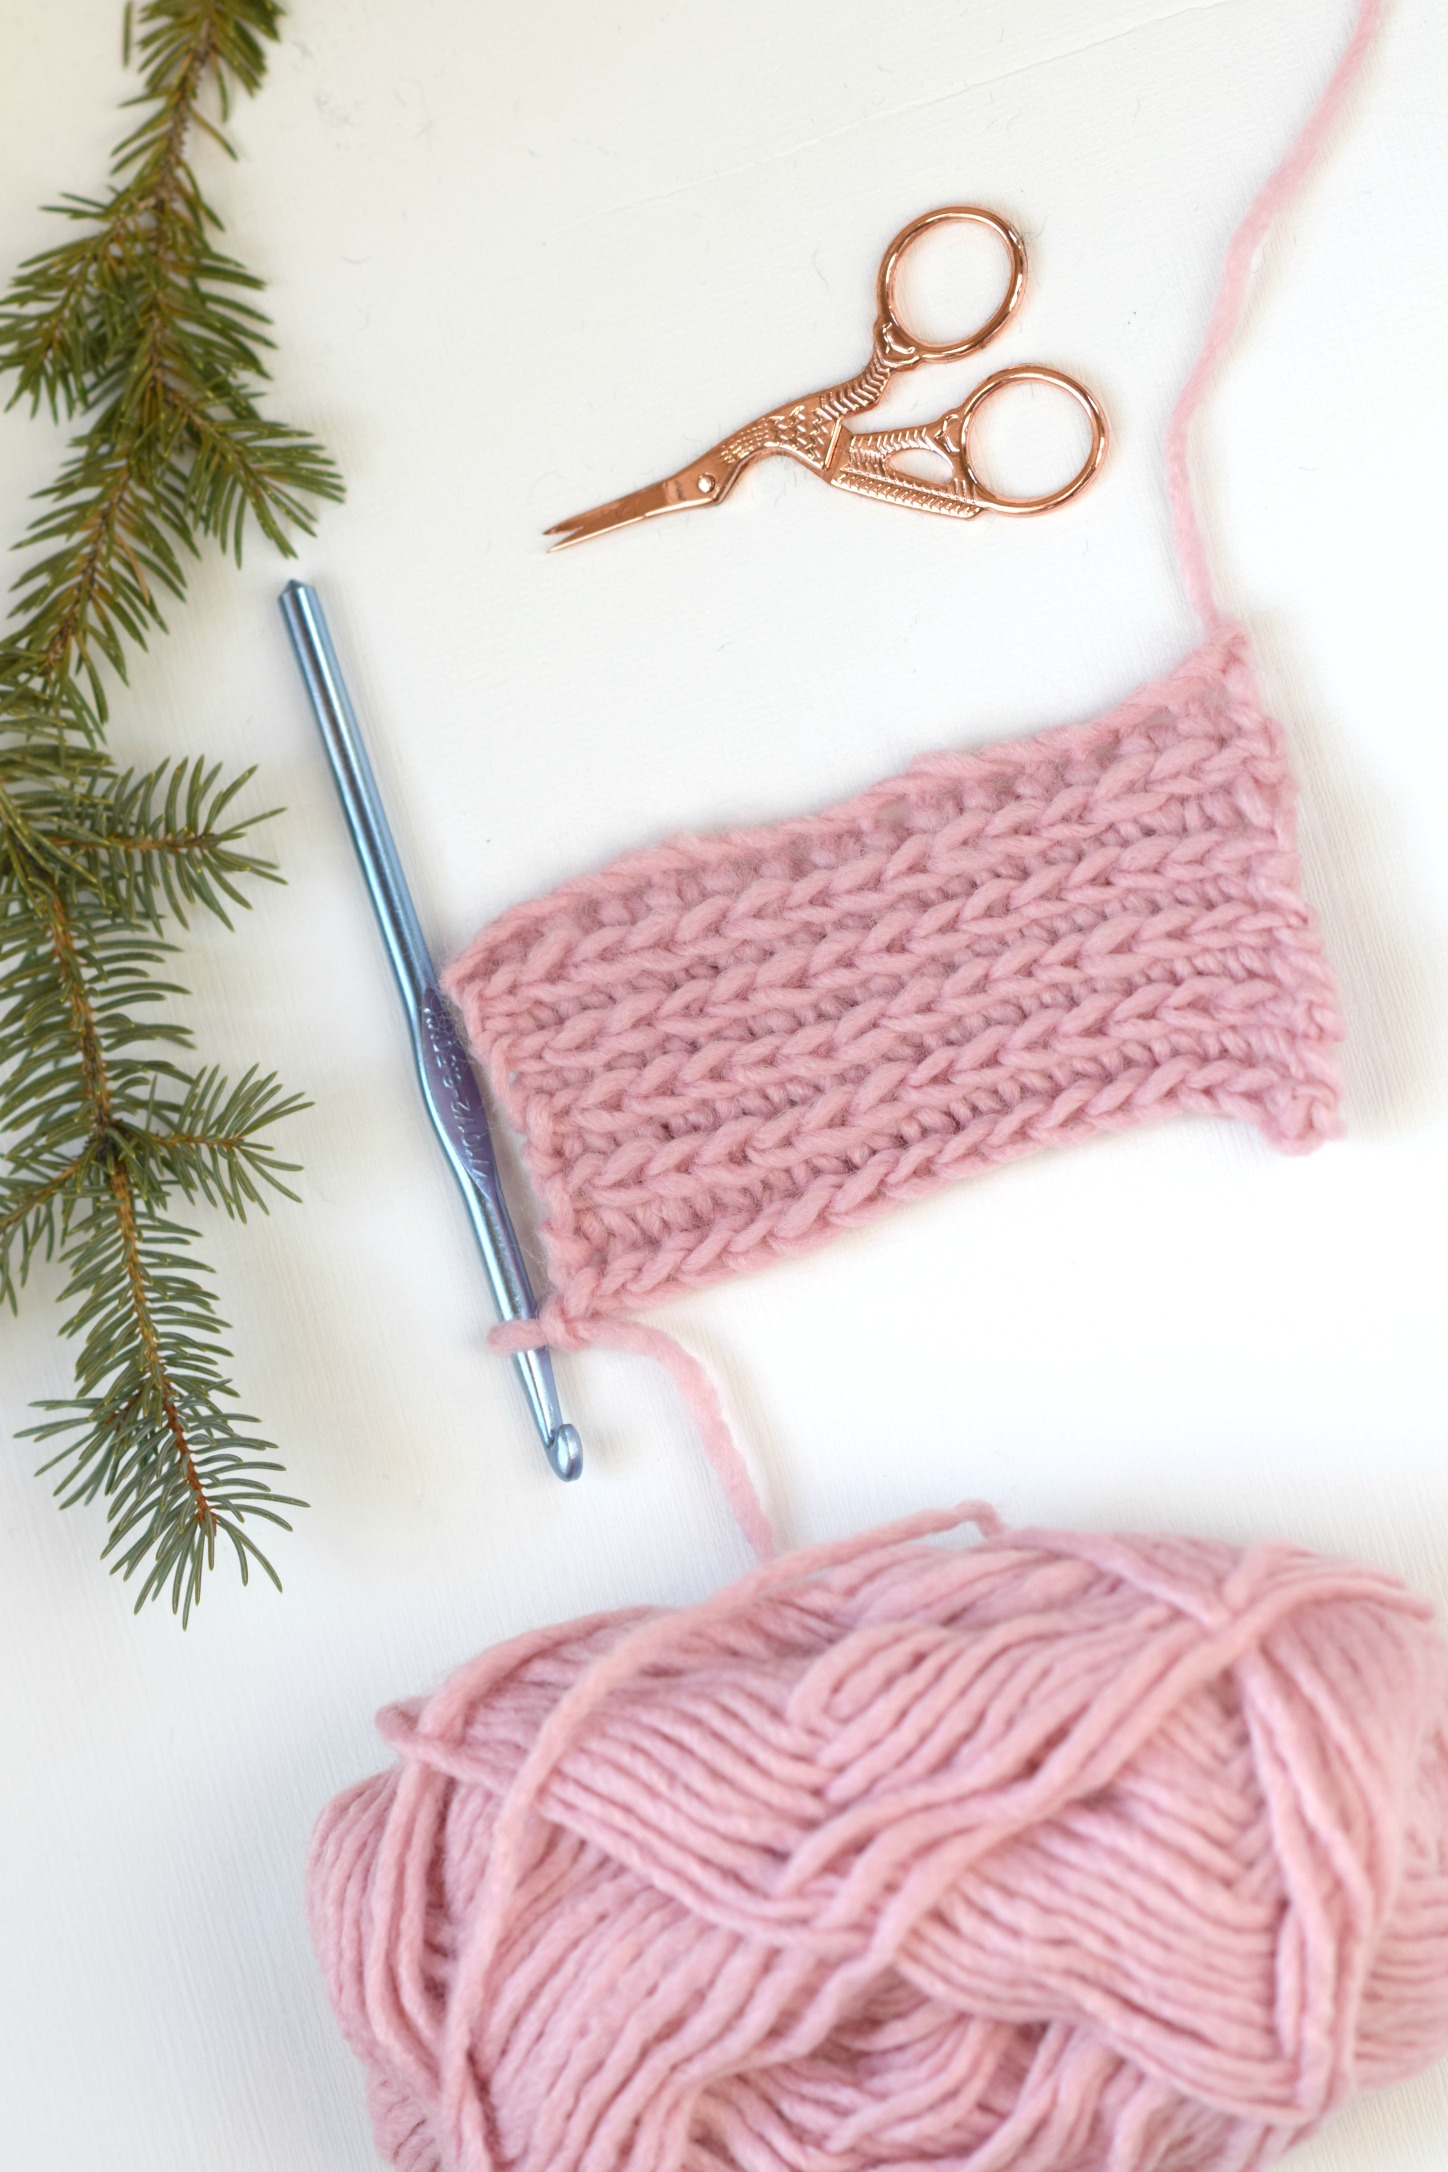 How To Crochet Ribbing